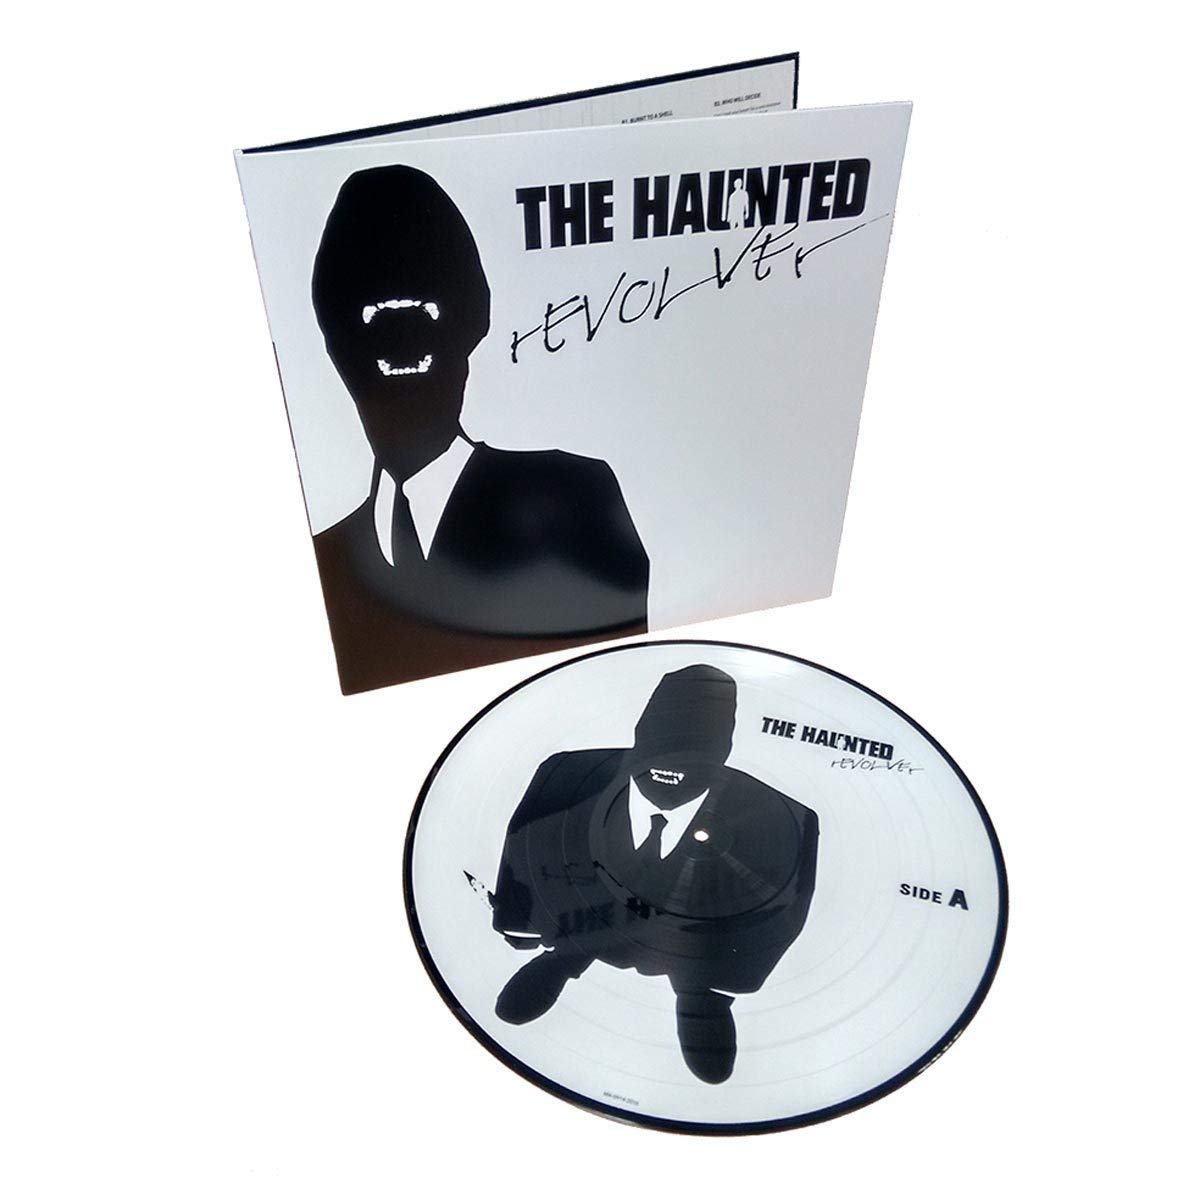 The Haunted "Revolver" Picture Disc Vinyl